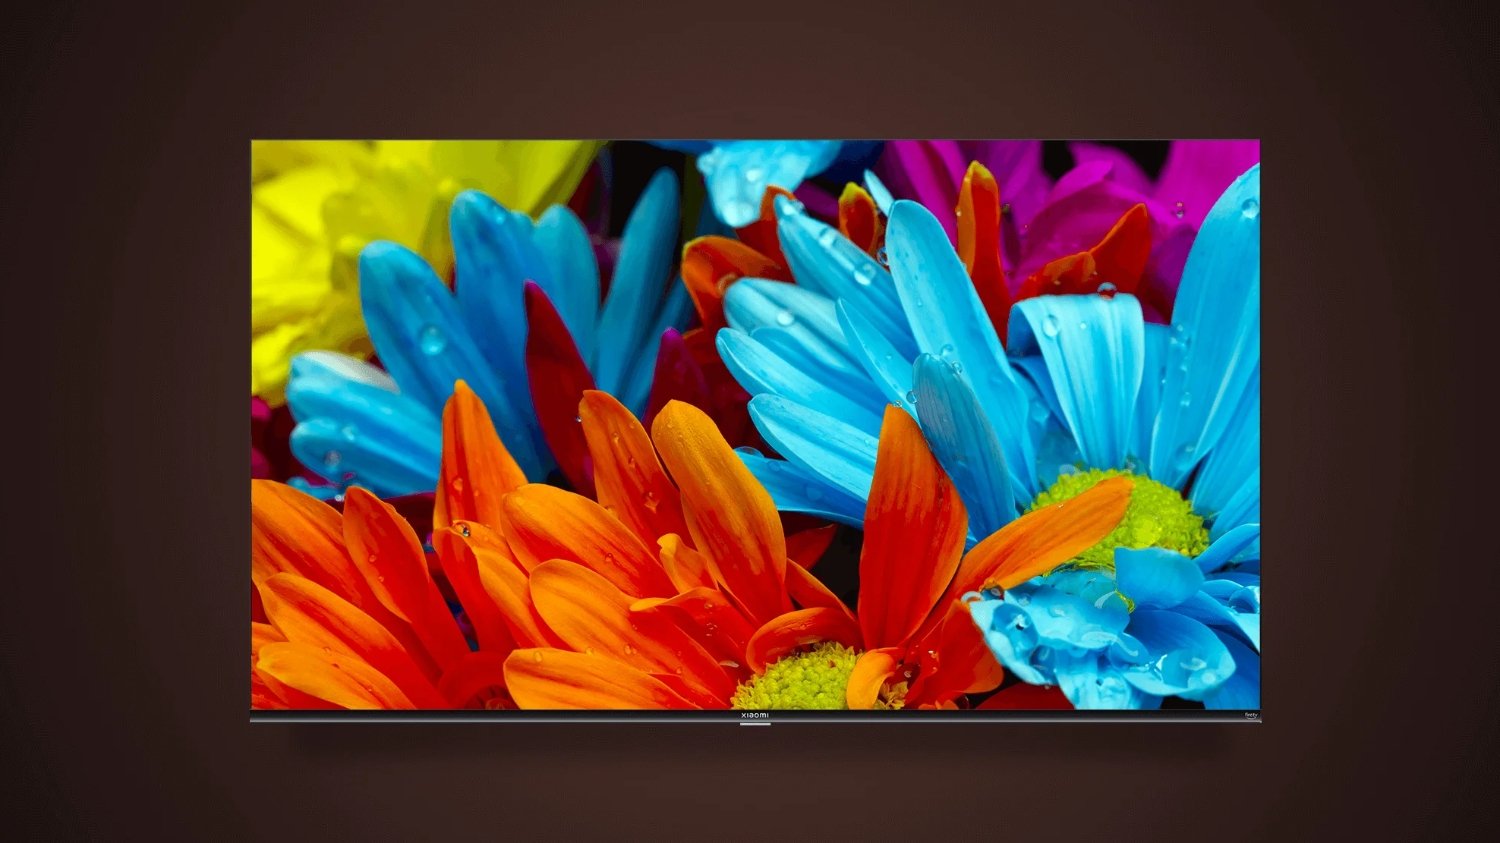 Xiaomi F2 smart TV